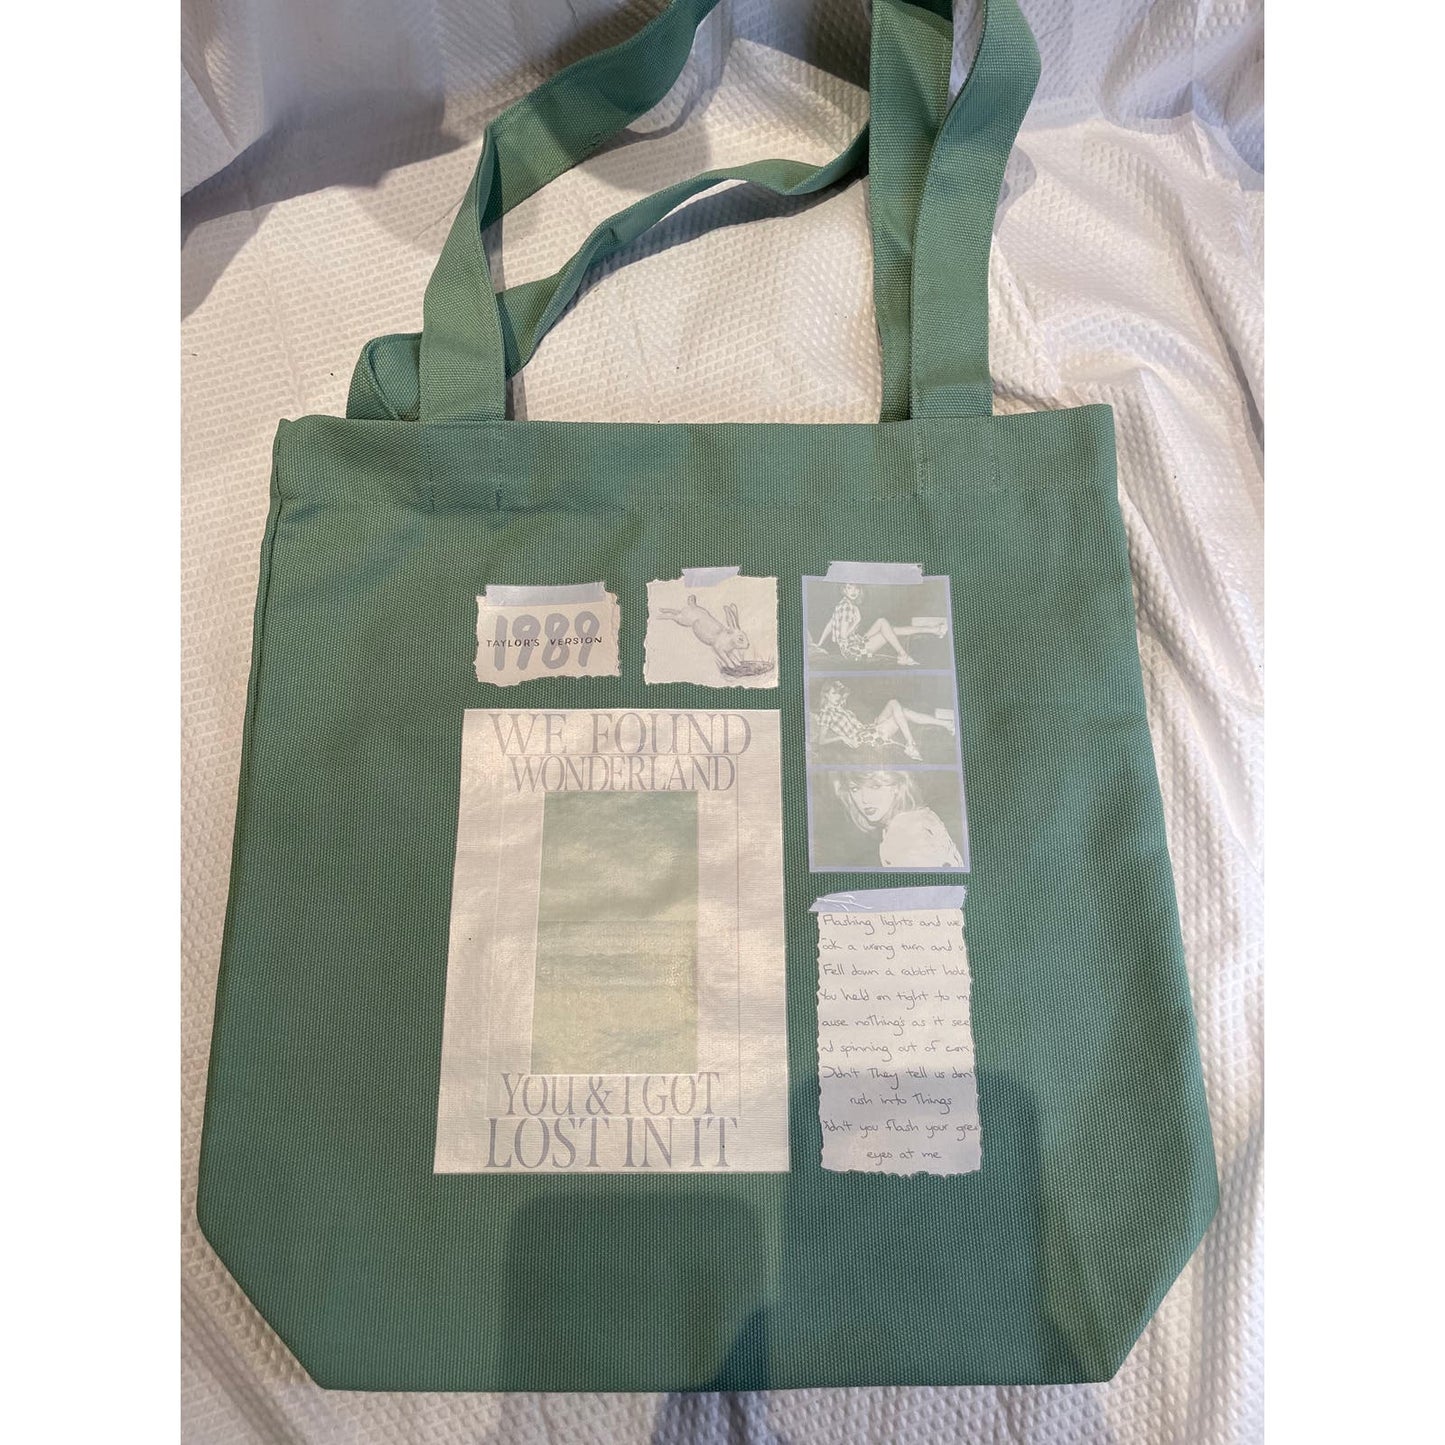 Taylor Swift Green We Found Wonderland Tote Bag 1989 Official Merchandise